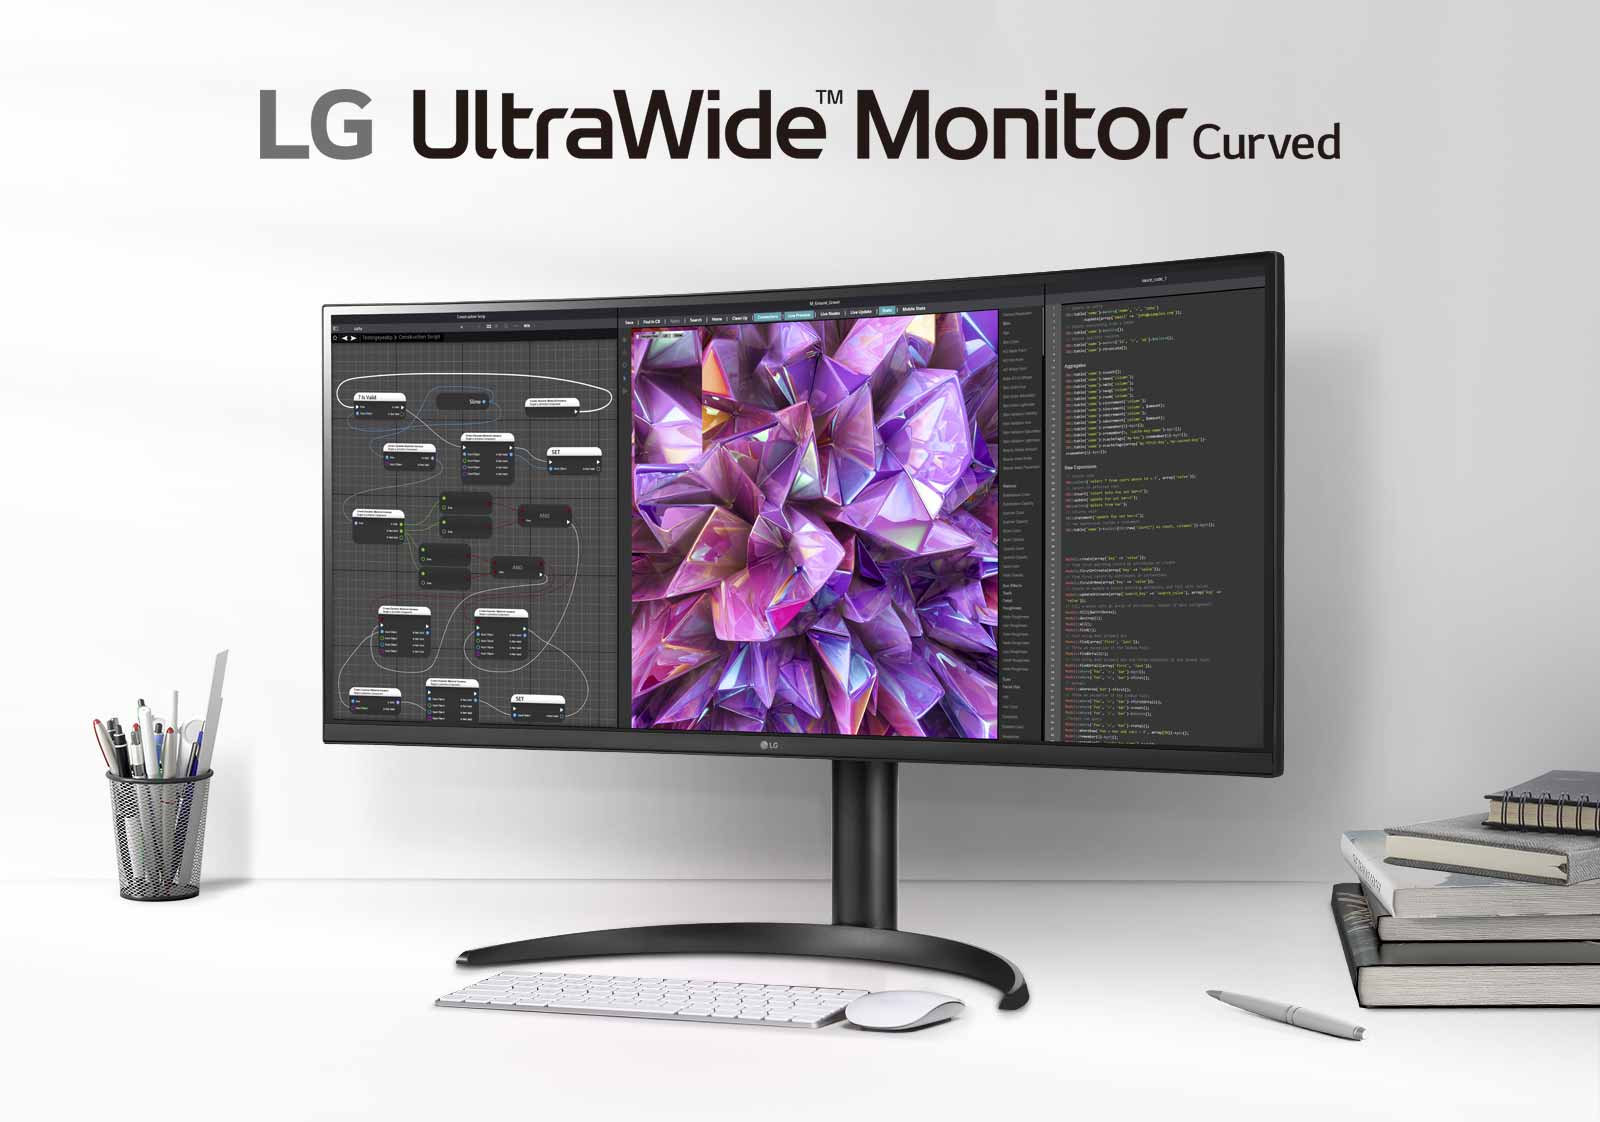 mnt-ultrawide-34wq75c-01-lg-ultrawide-monitor-curved-desktop